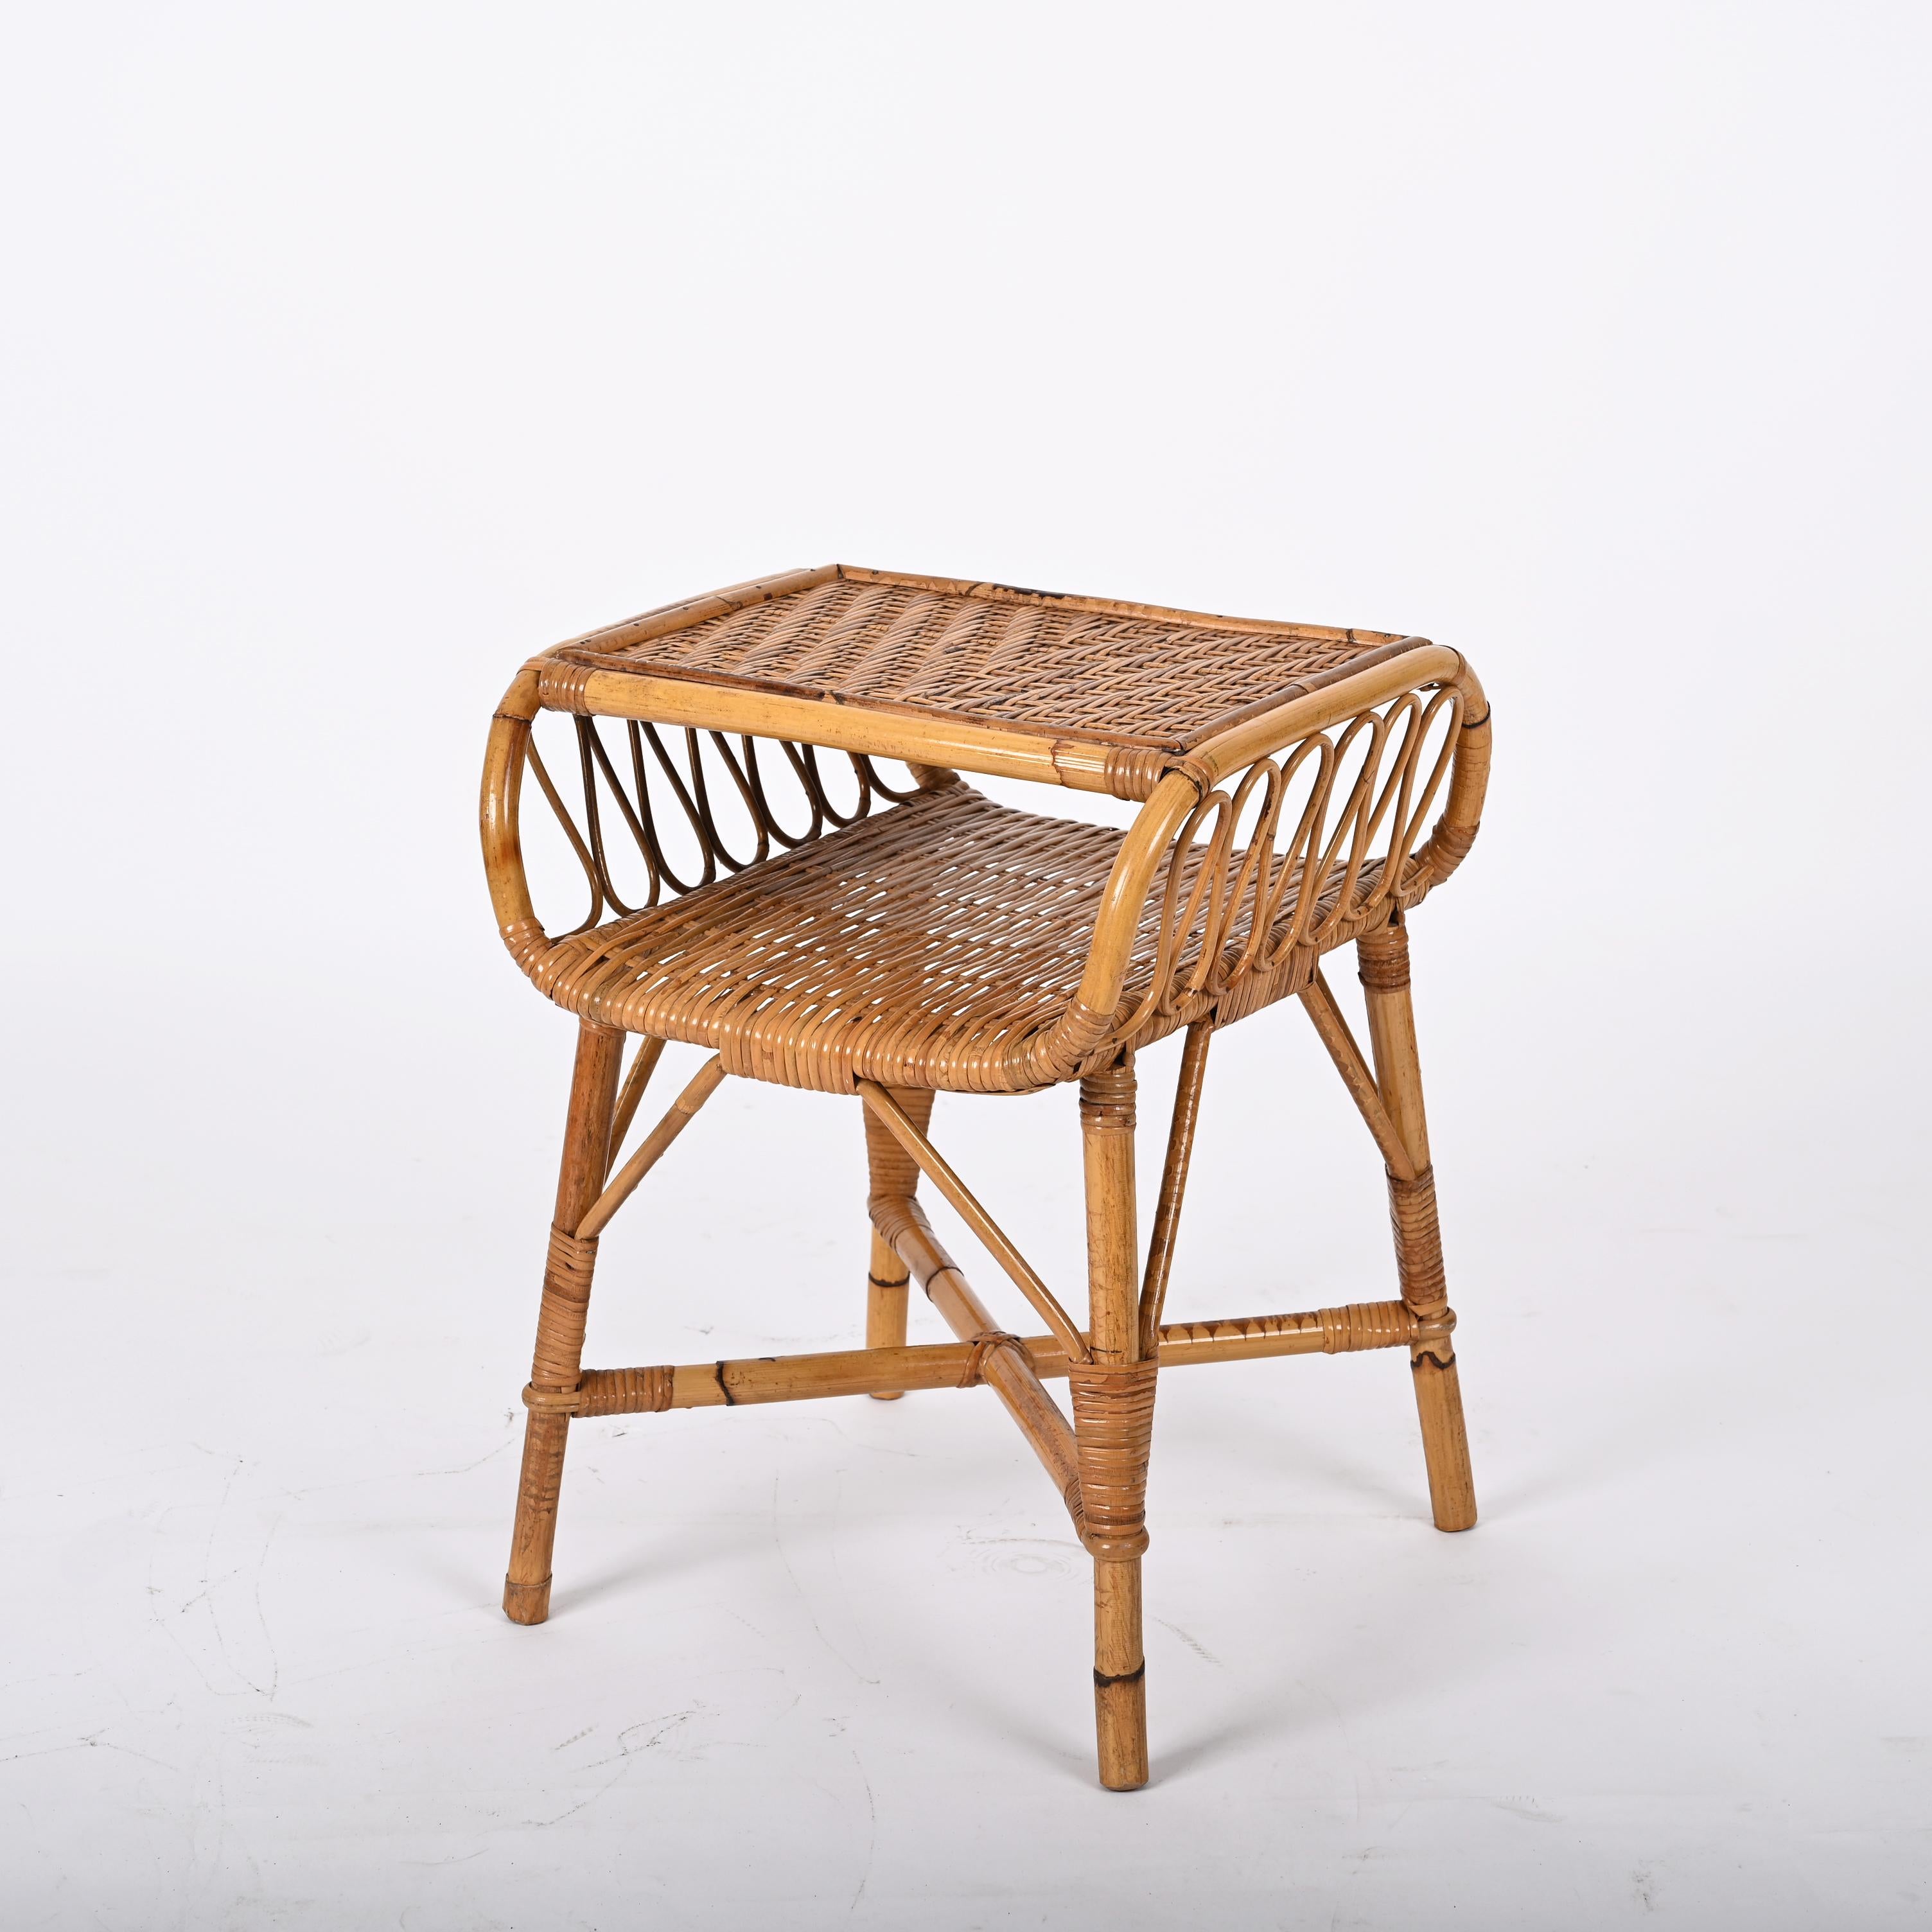 European Midcentury Modern Bamboo Rattan and Wood Italian Bedside Table, 1960s